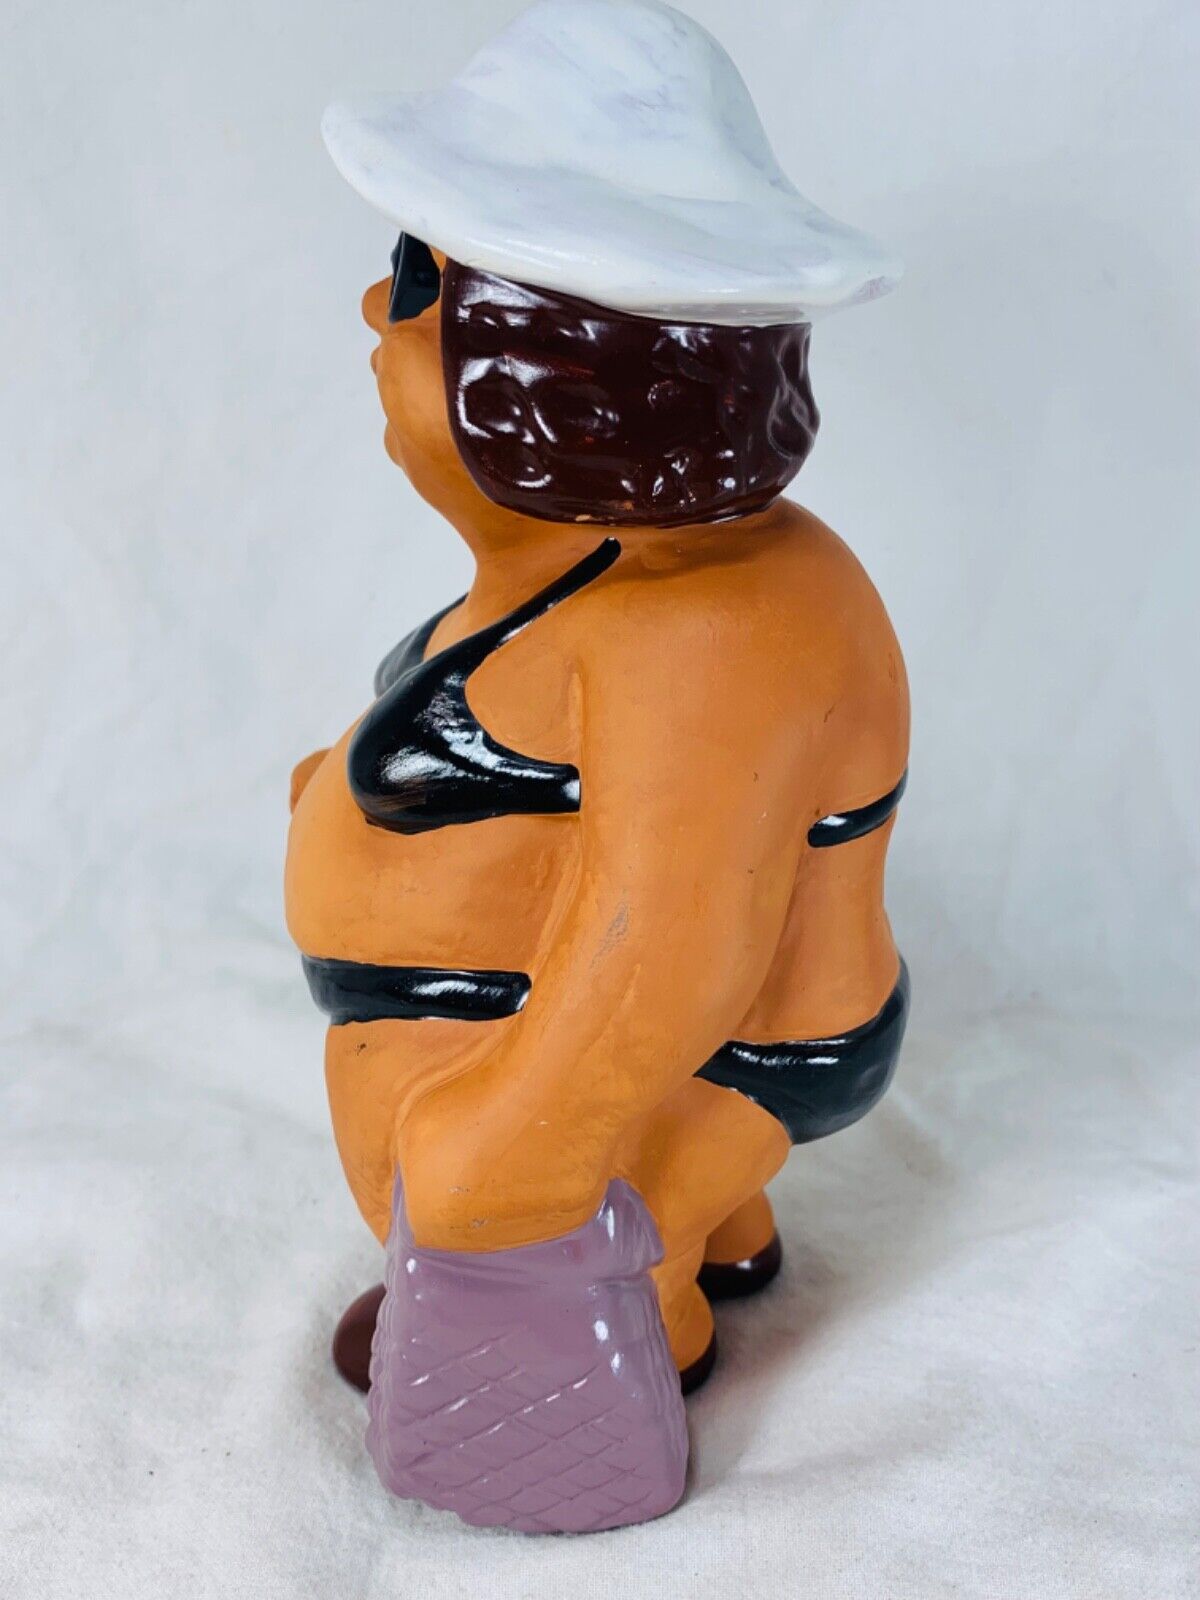 Vintage Rolf Berg ceramic funny beach beauty figurine 18cm tall Sweden